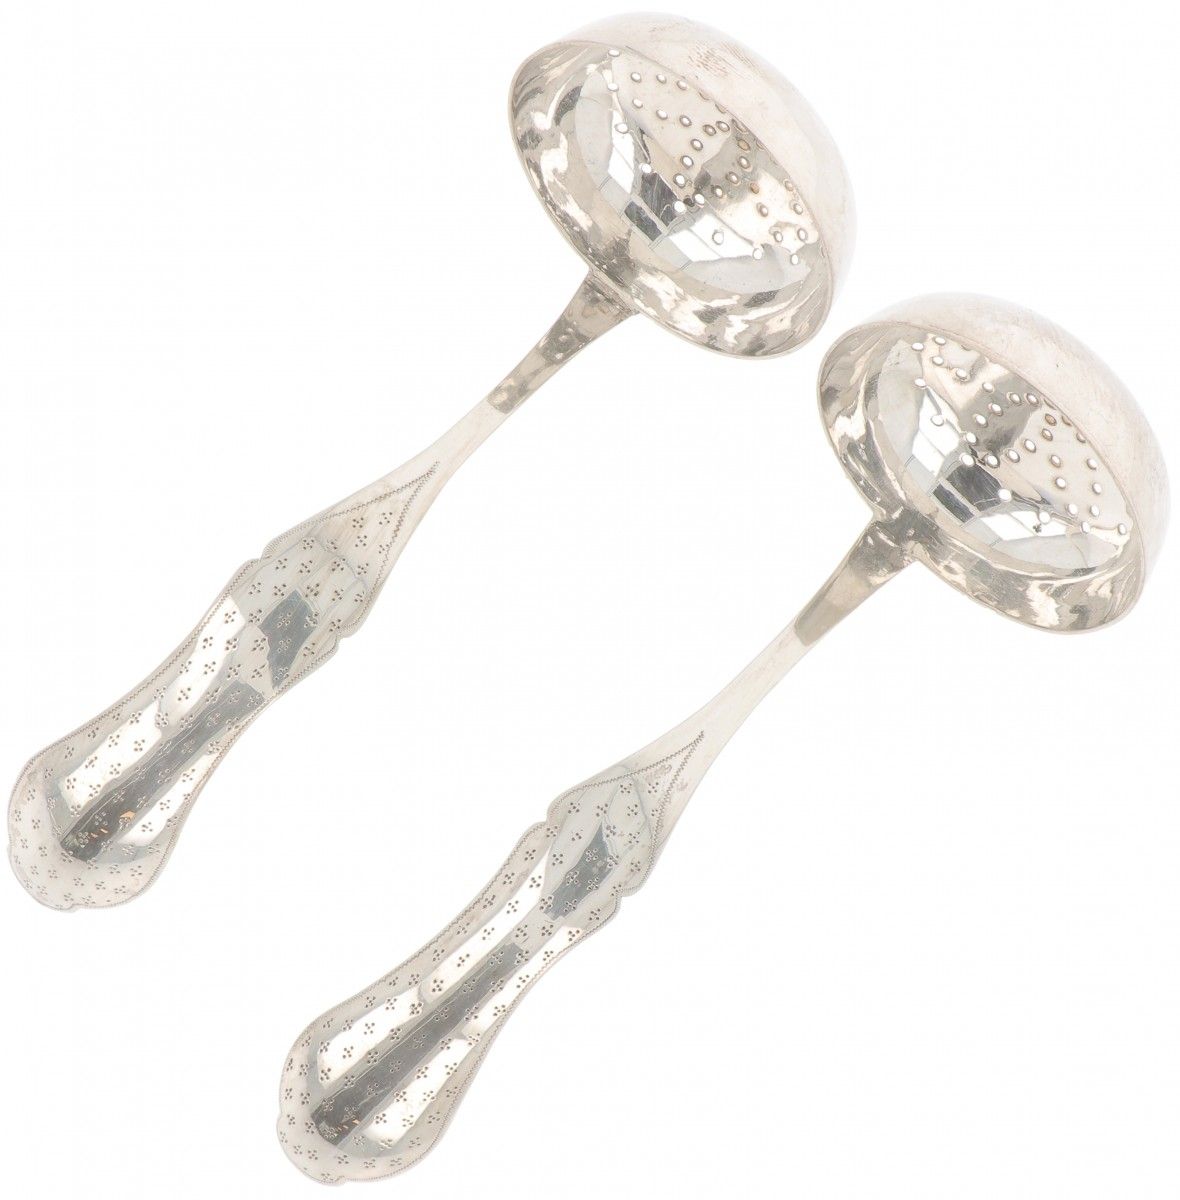 (2) piece set of silver sprinkler spoons. With engraved Biedermeier decorations.&hellip;